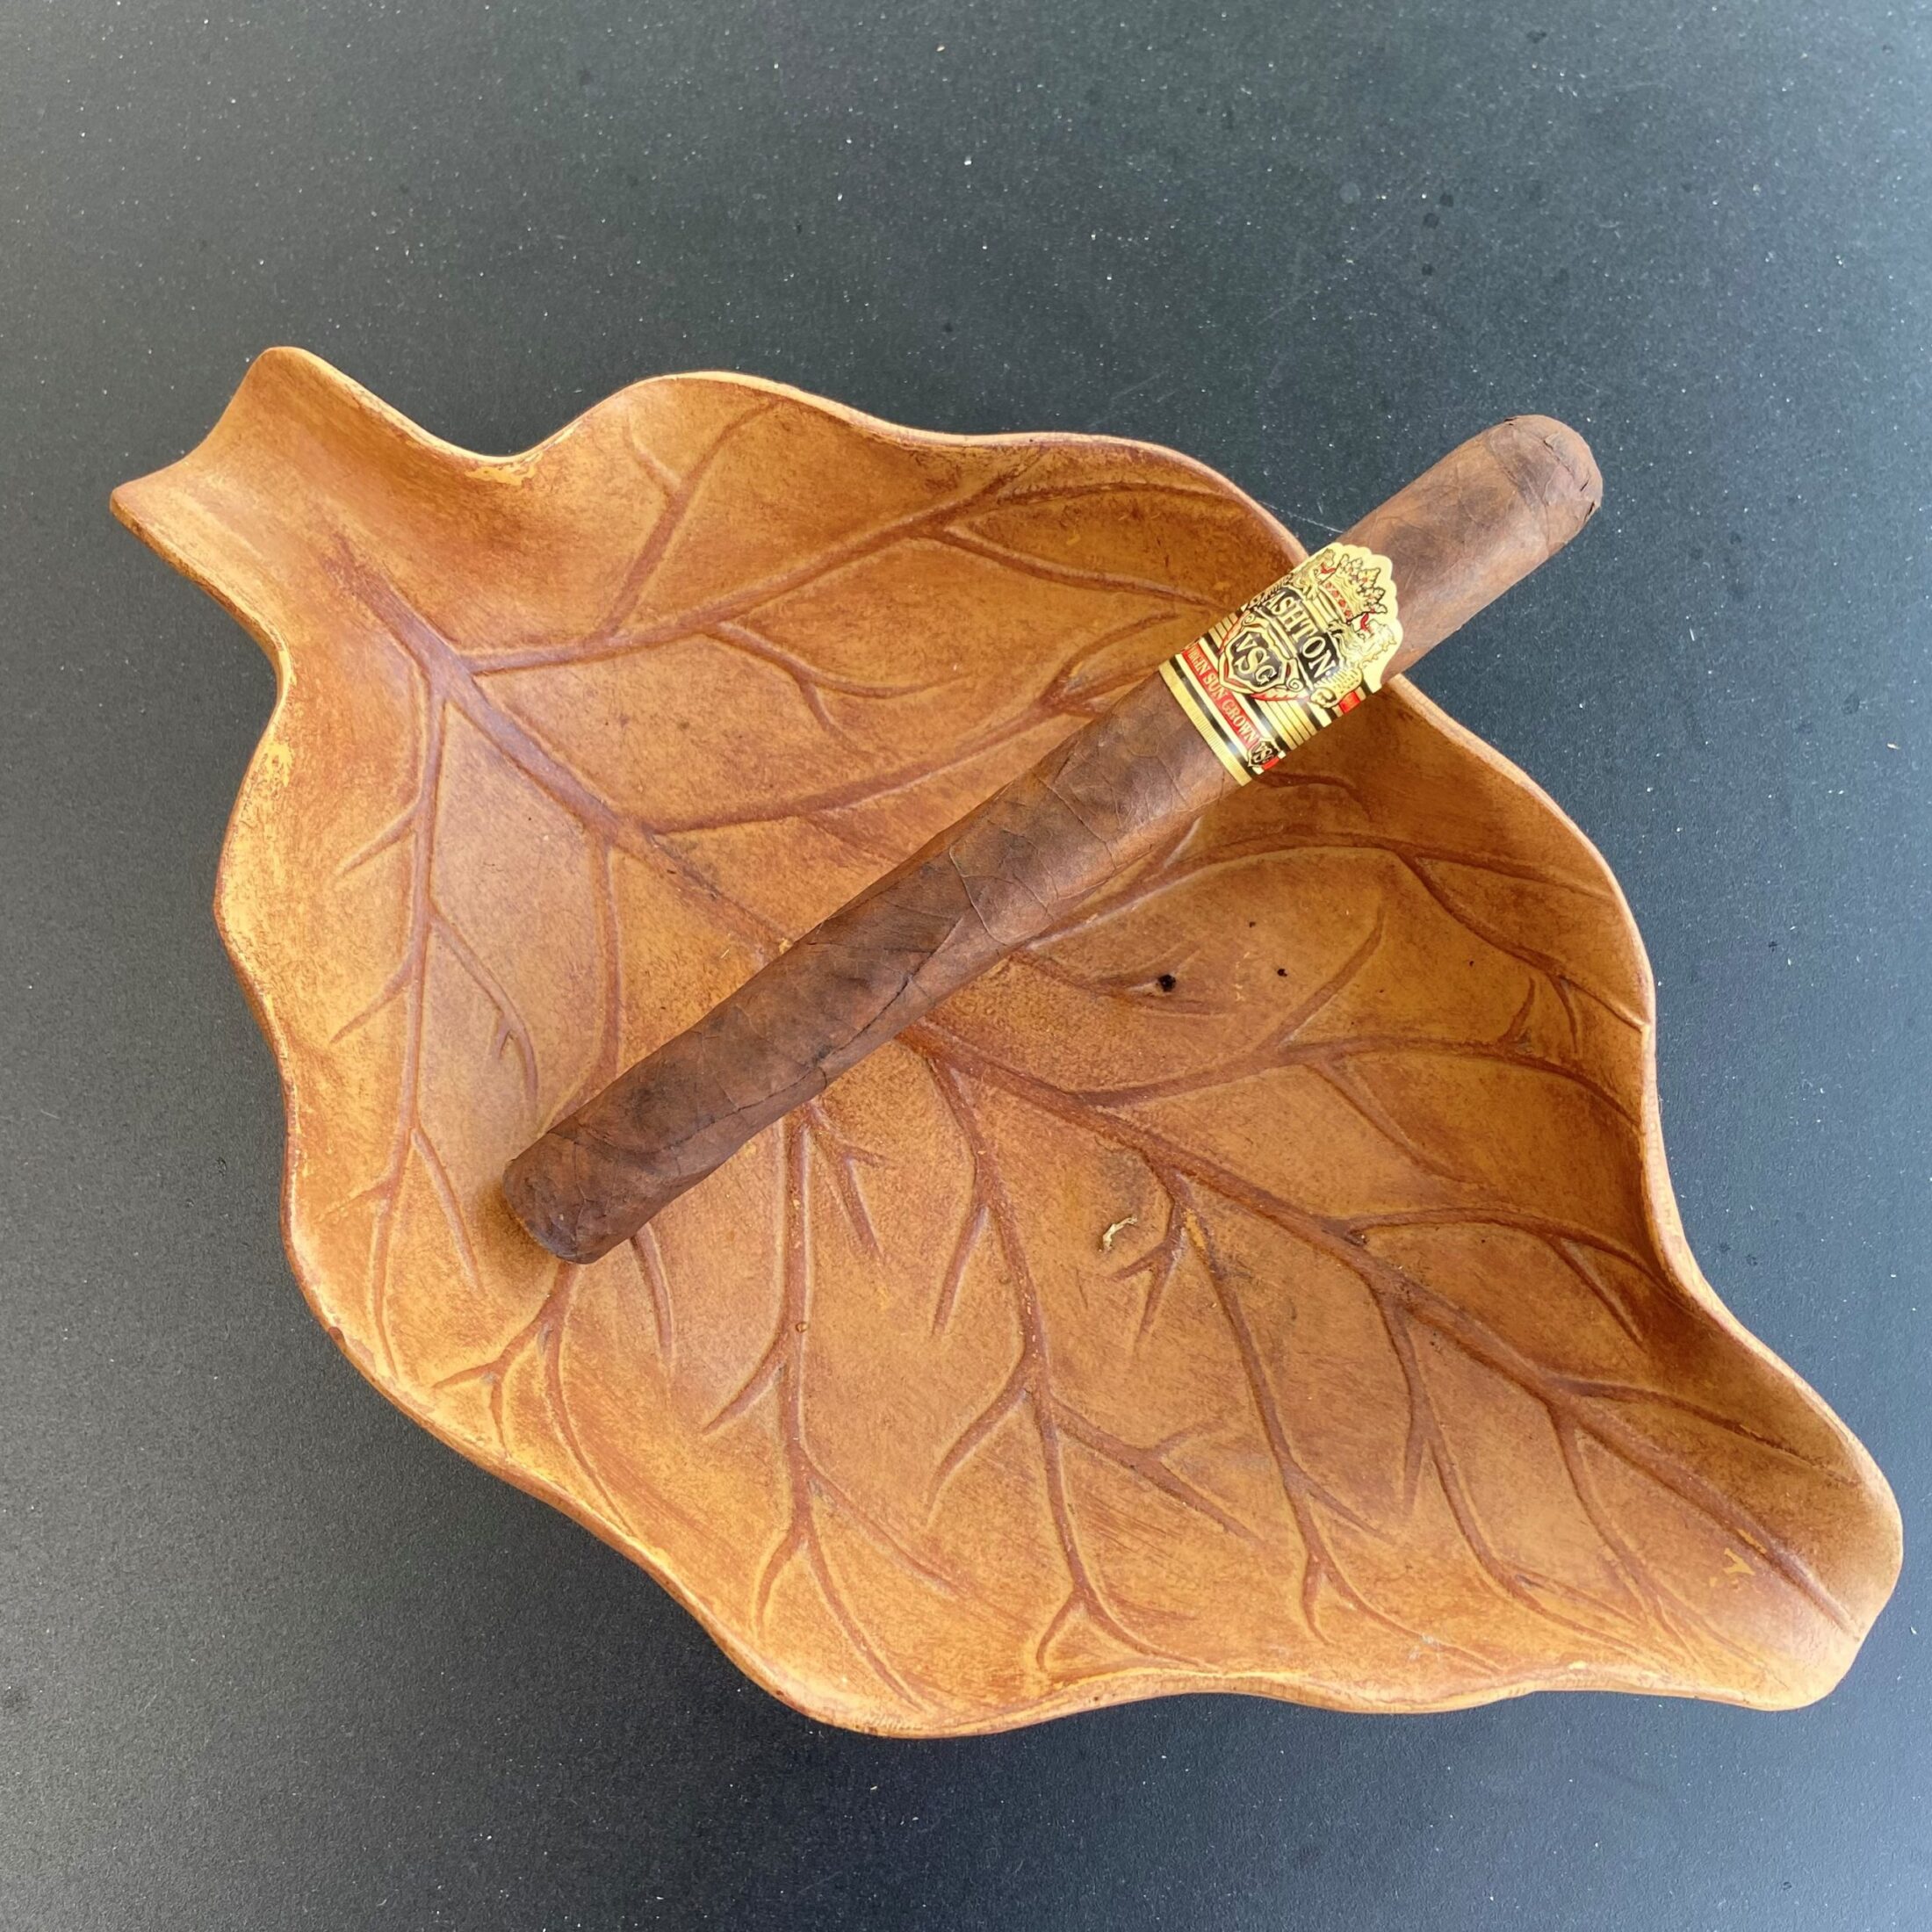 Single Ashton VSG Sorcerer cigar laid in an orange leaf shaped ashtray